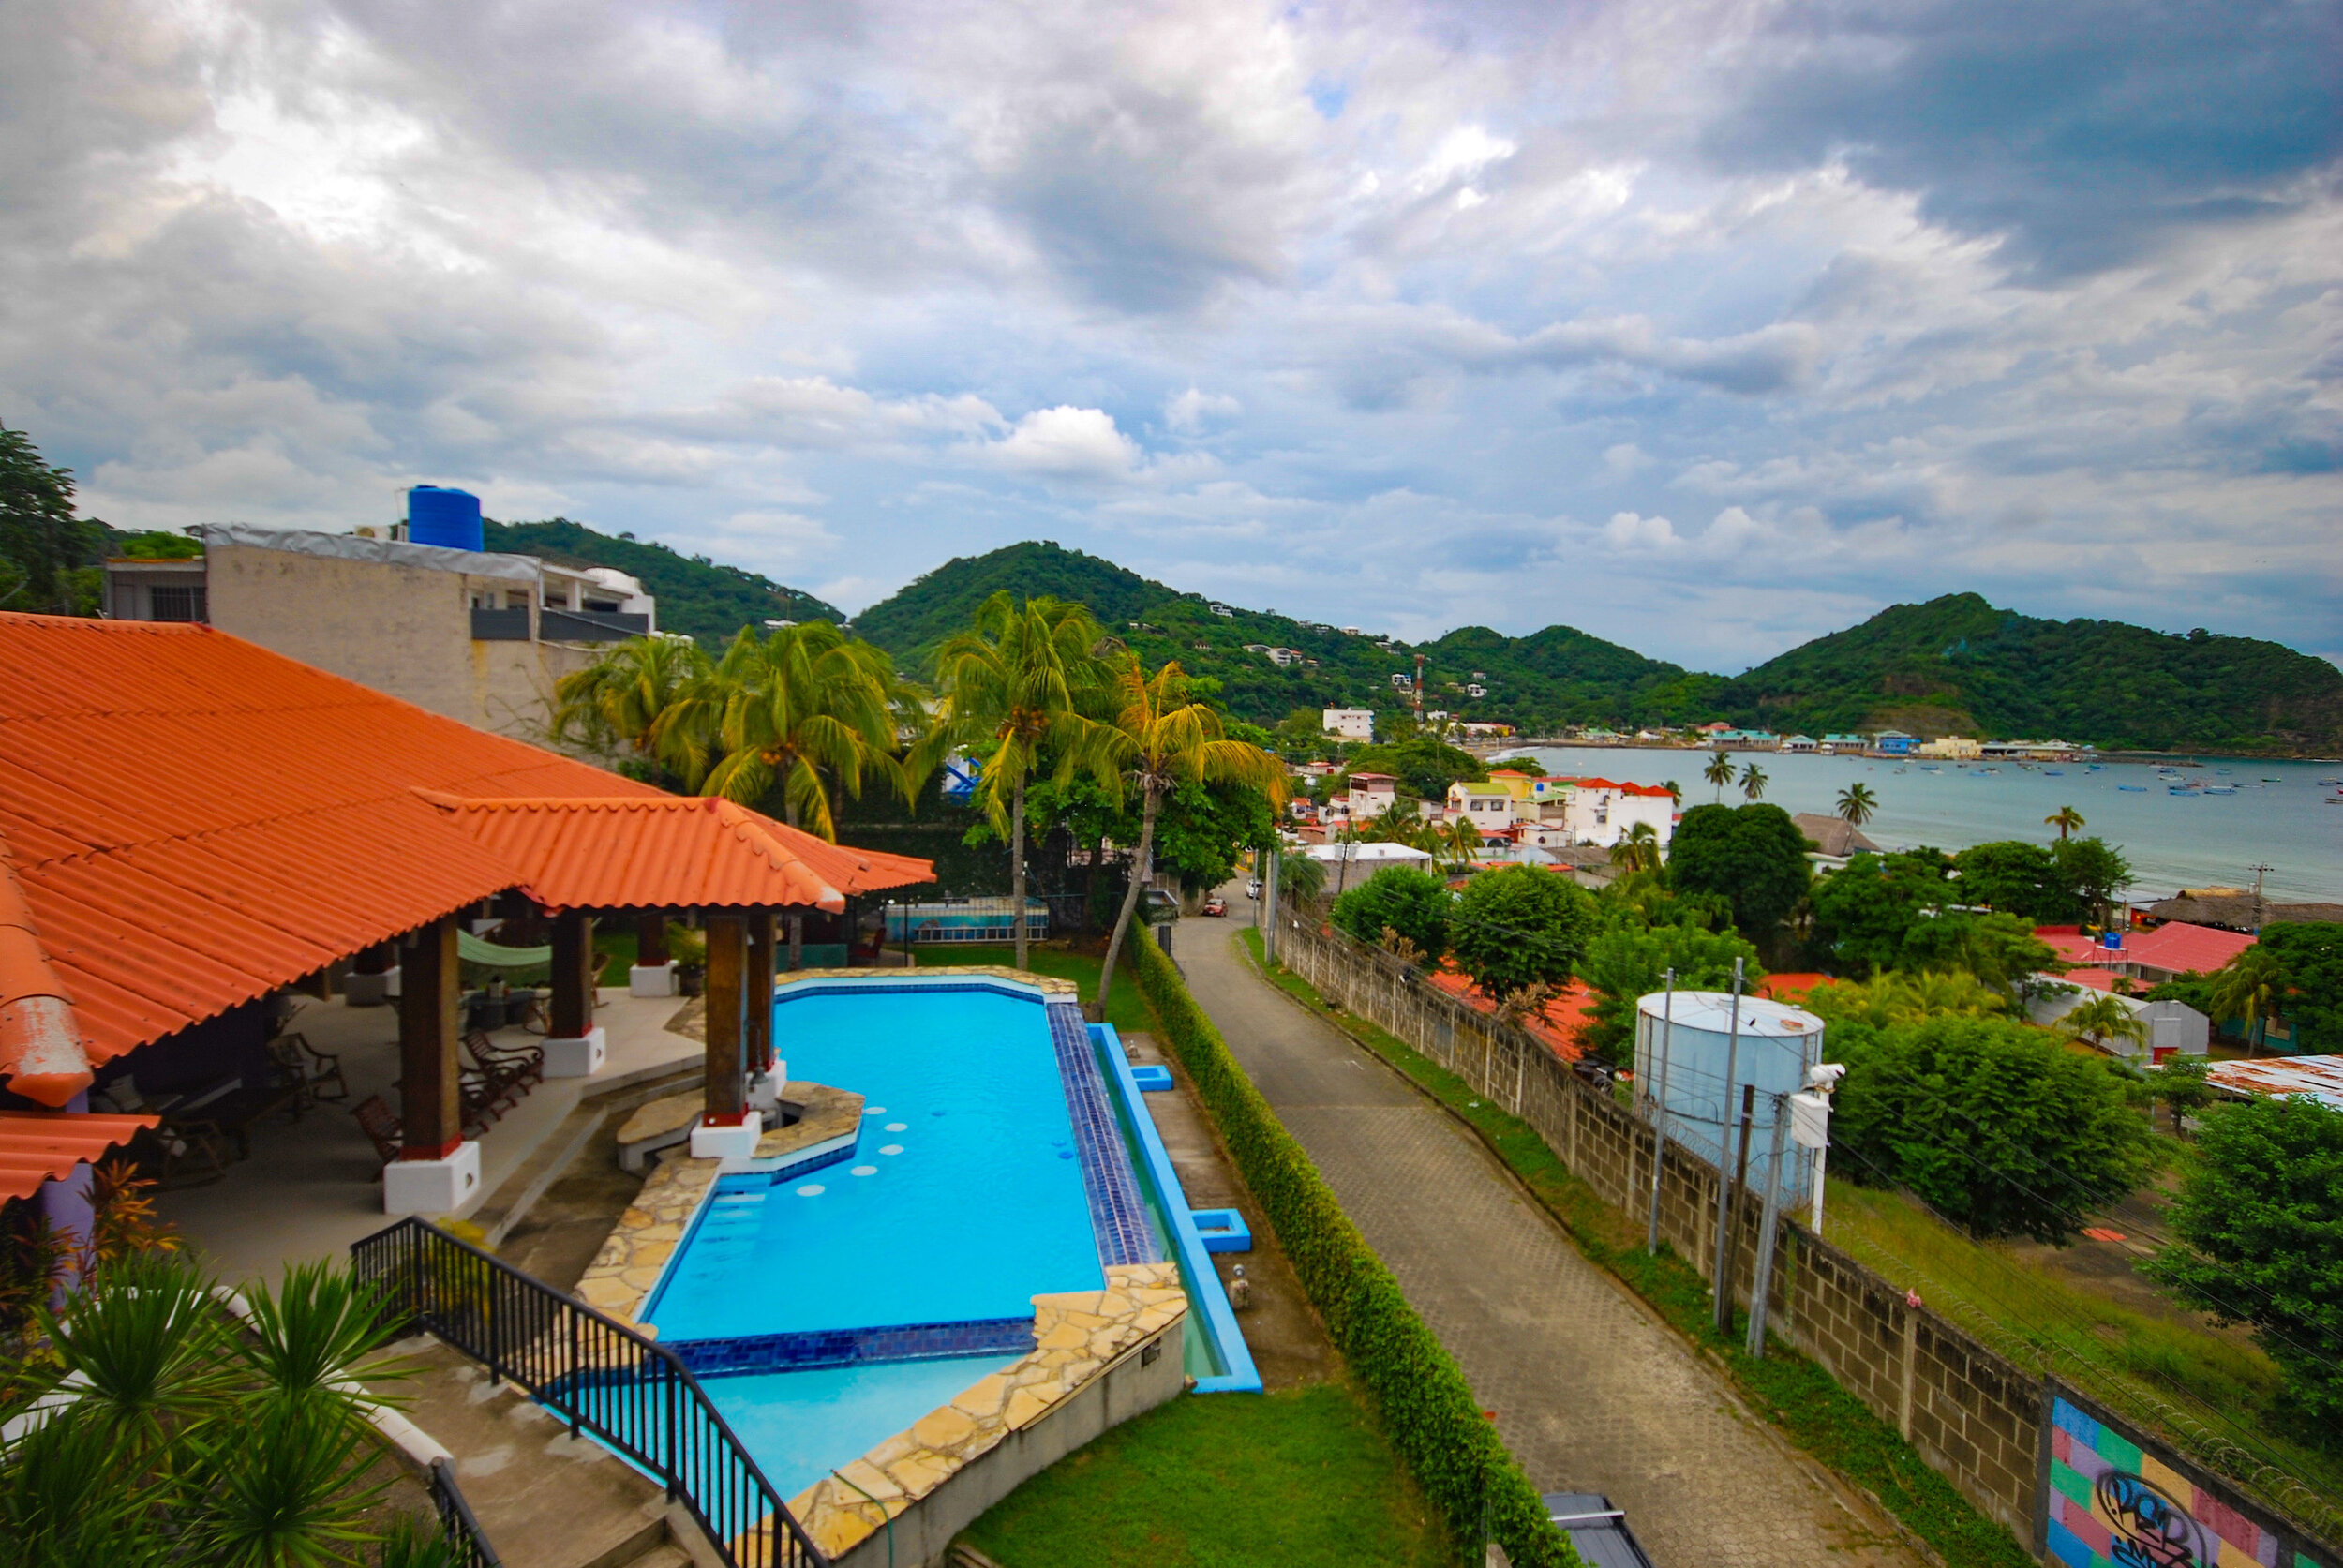 Hotel Resort For Sale San Juan Del Sur Nicaragua 29.JPEG